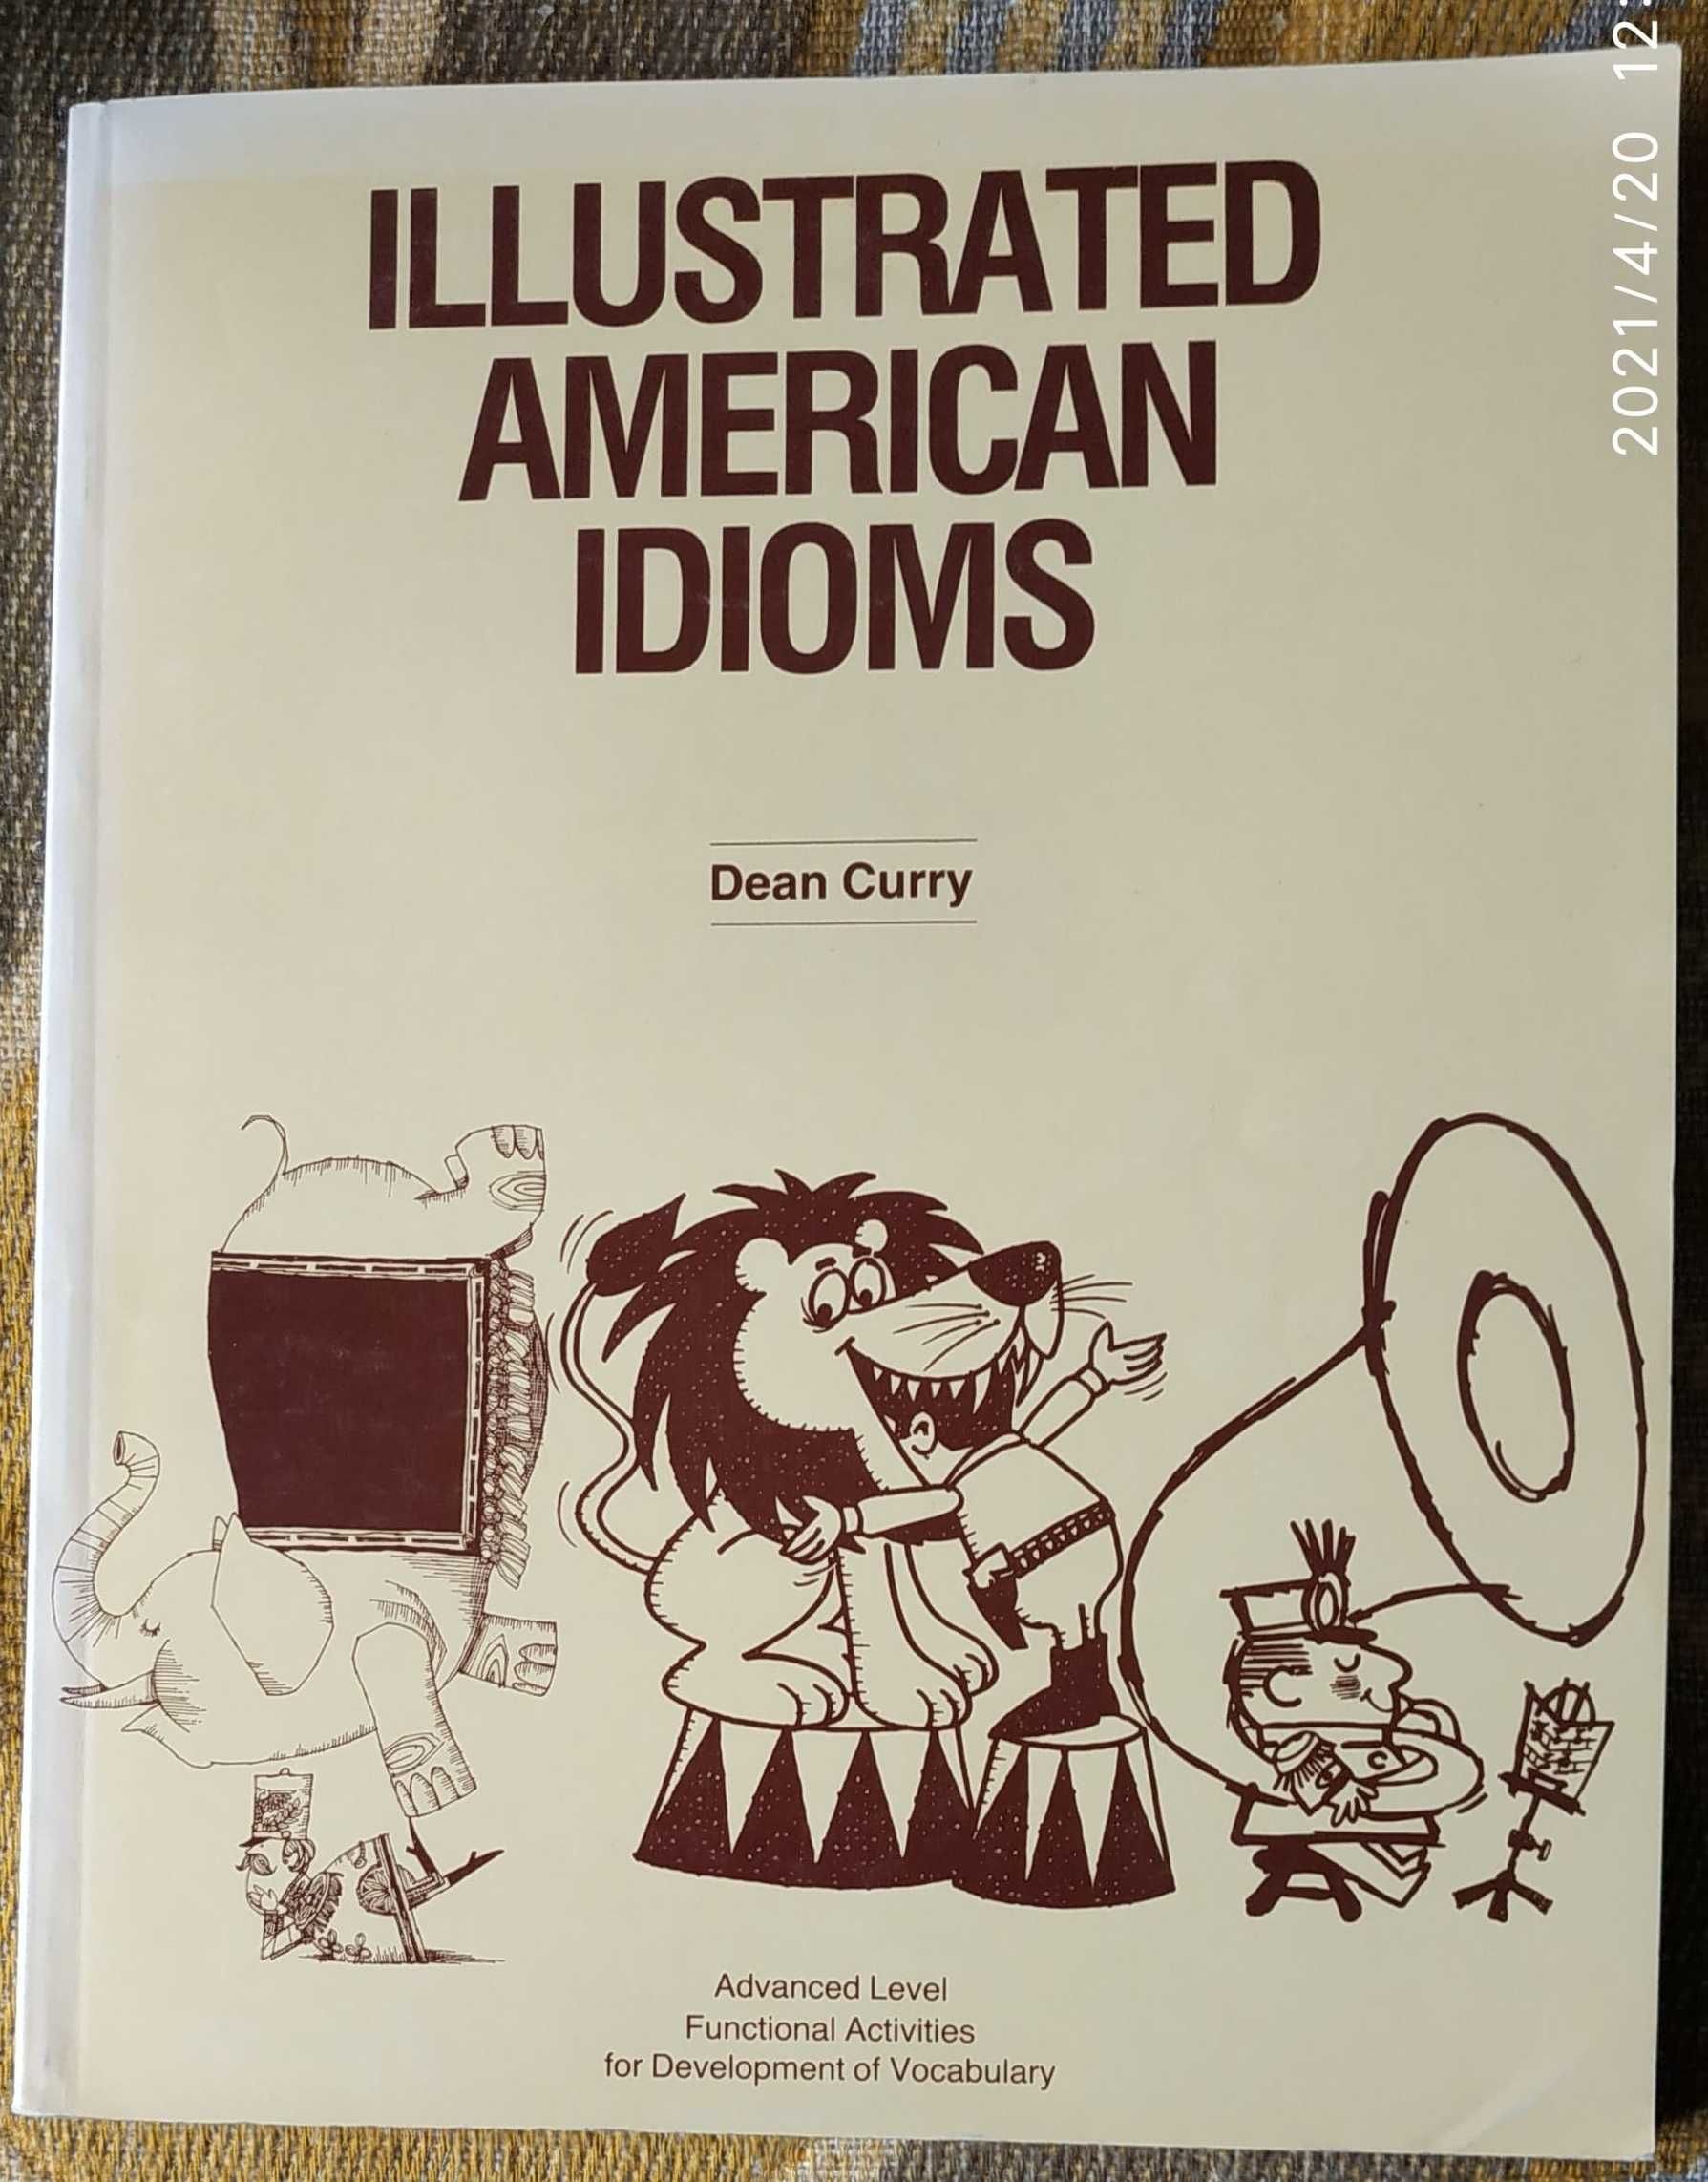 Illustrated American Idioms